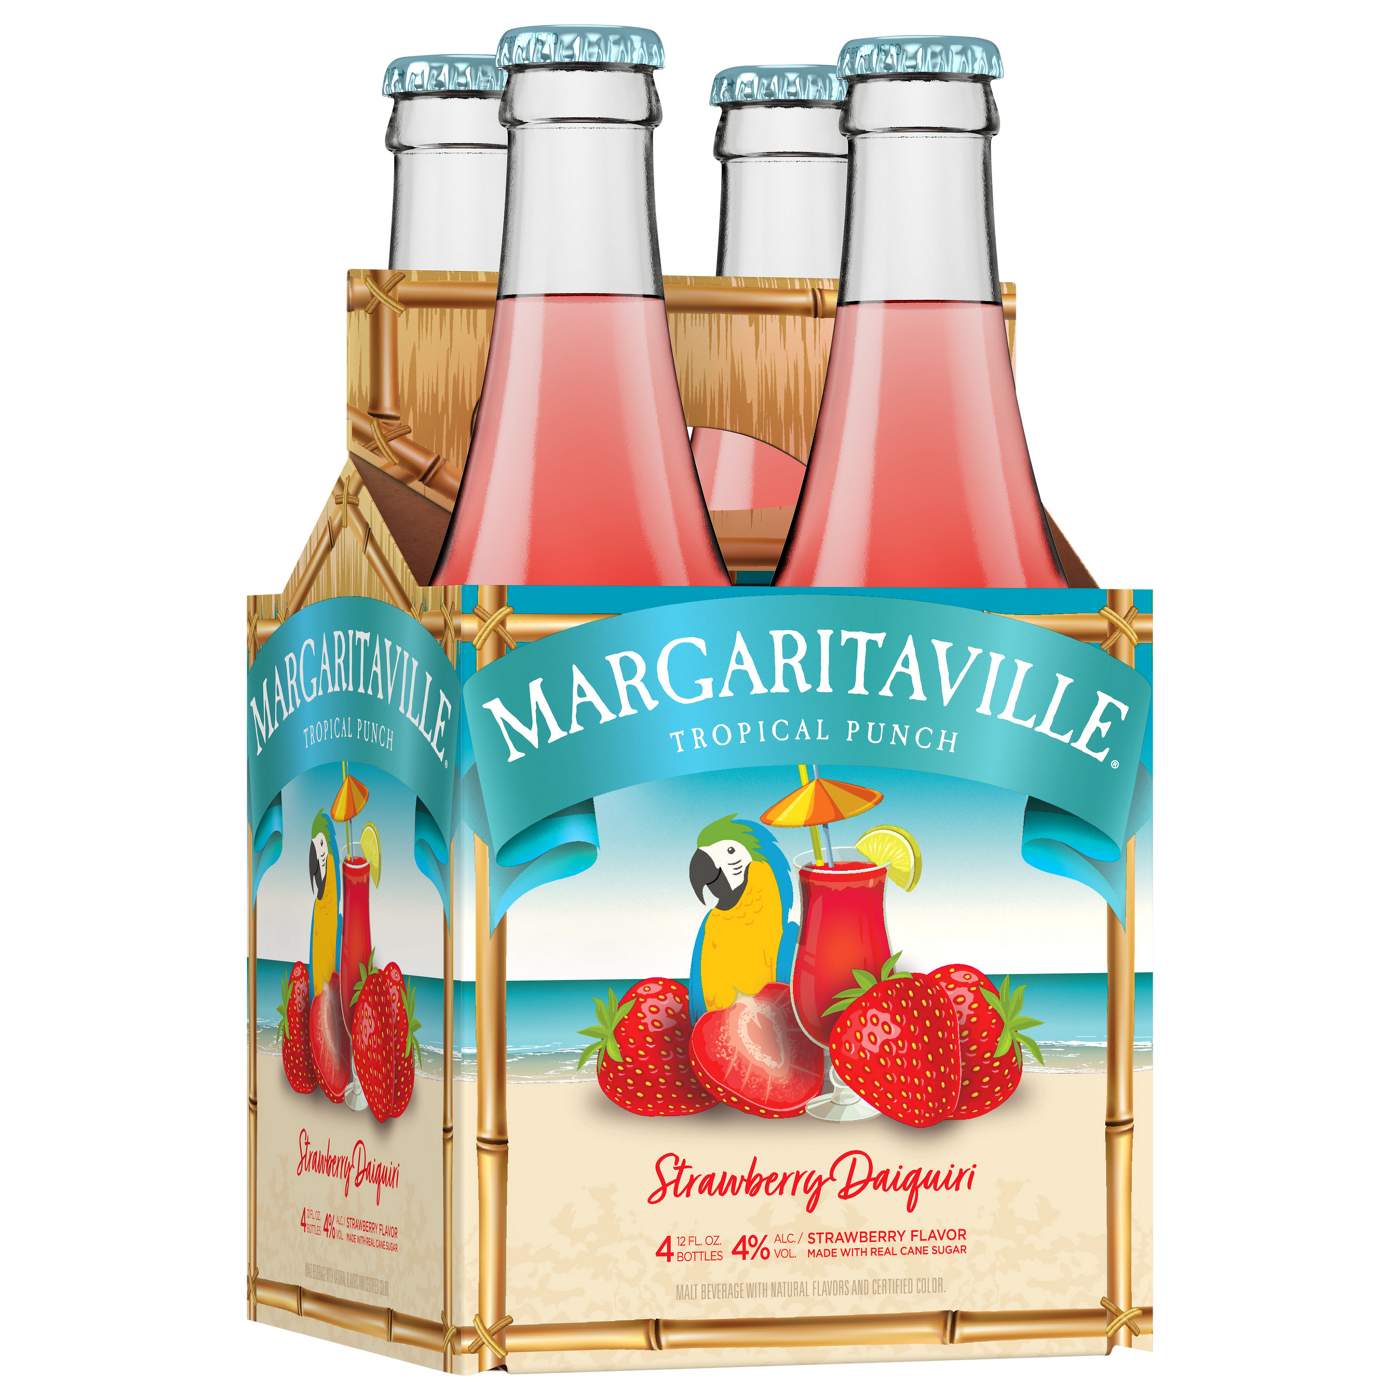 Margaritaville Tropical Punch Strawberry Daiquiri 12 oz Bottles; image 1 of 2